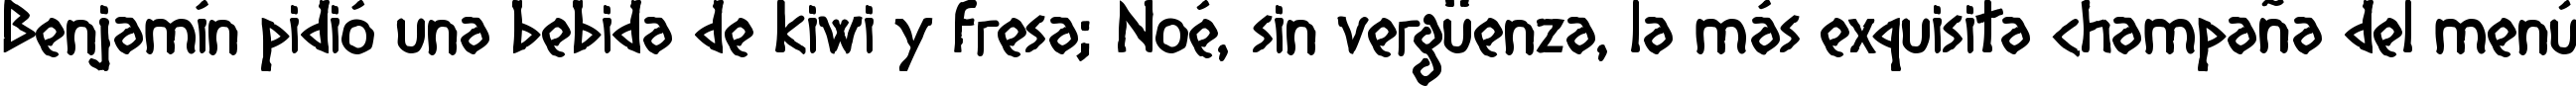 Пример написания шрифтом Diogenes текста на испанском